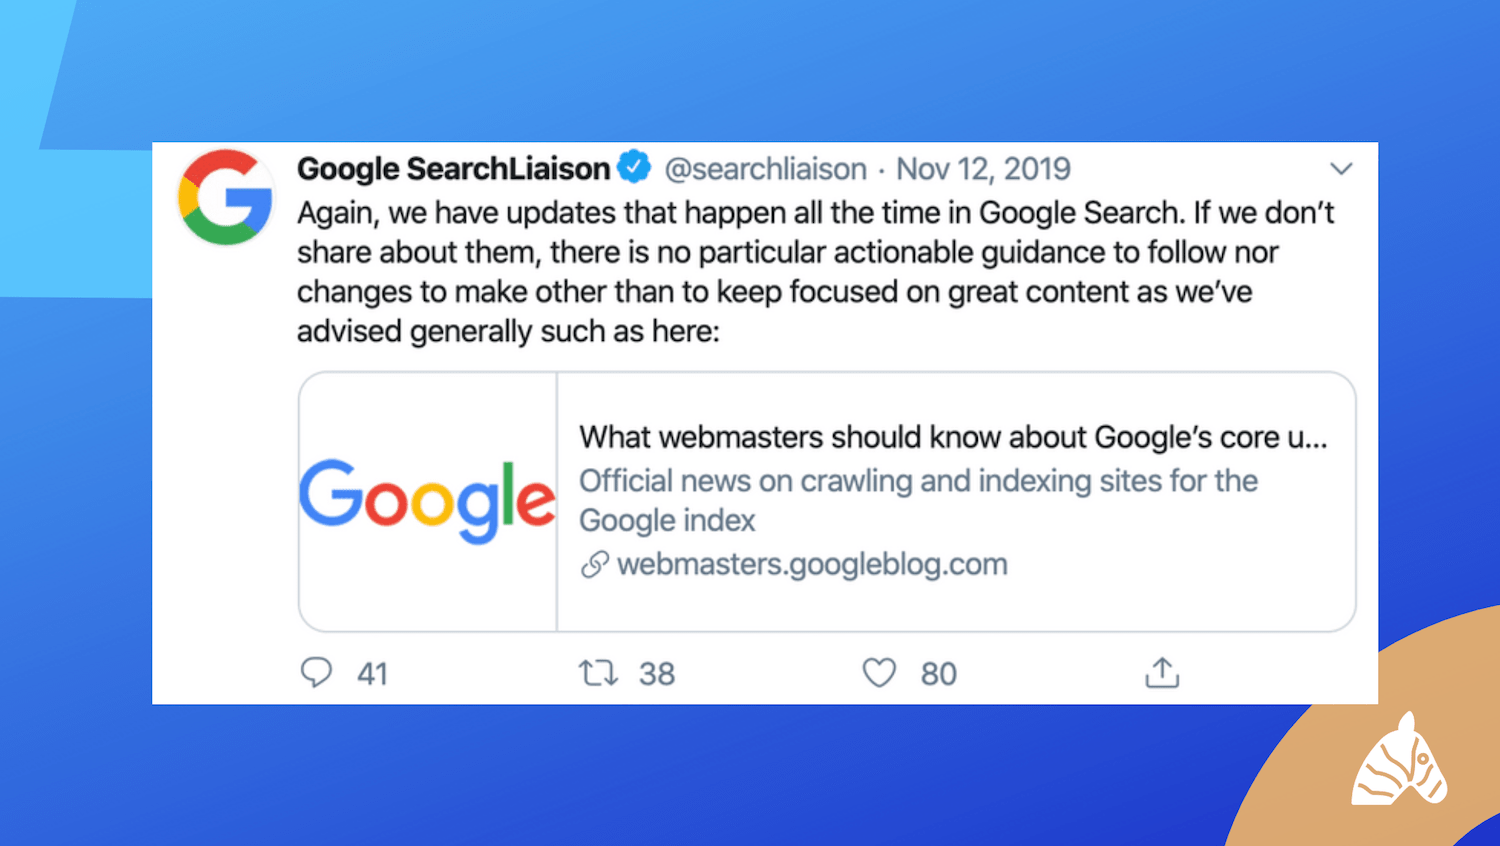 google search liason tweet about january 2020 core update